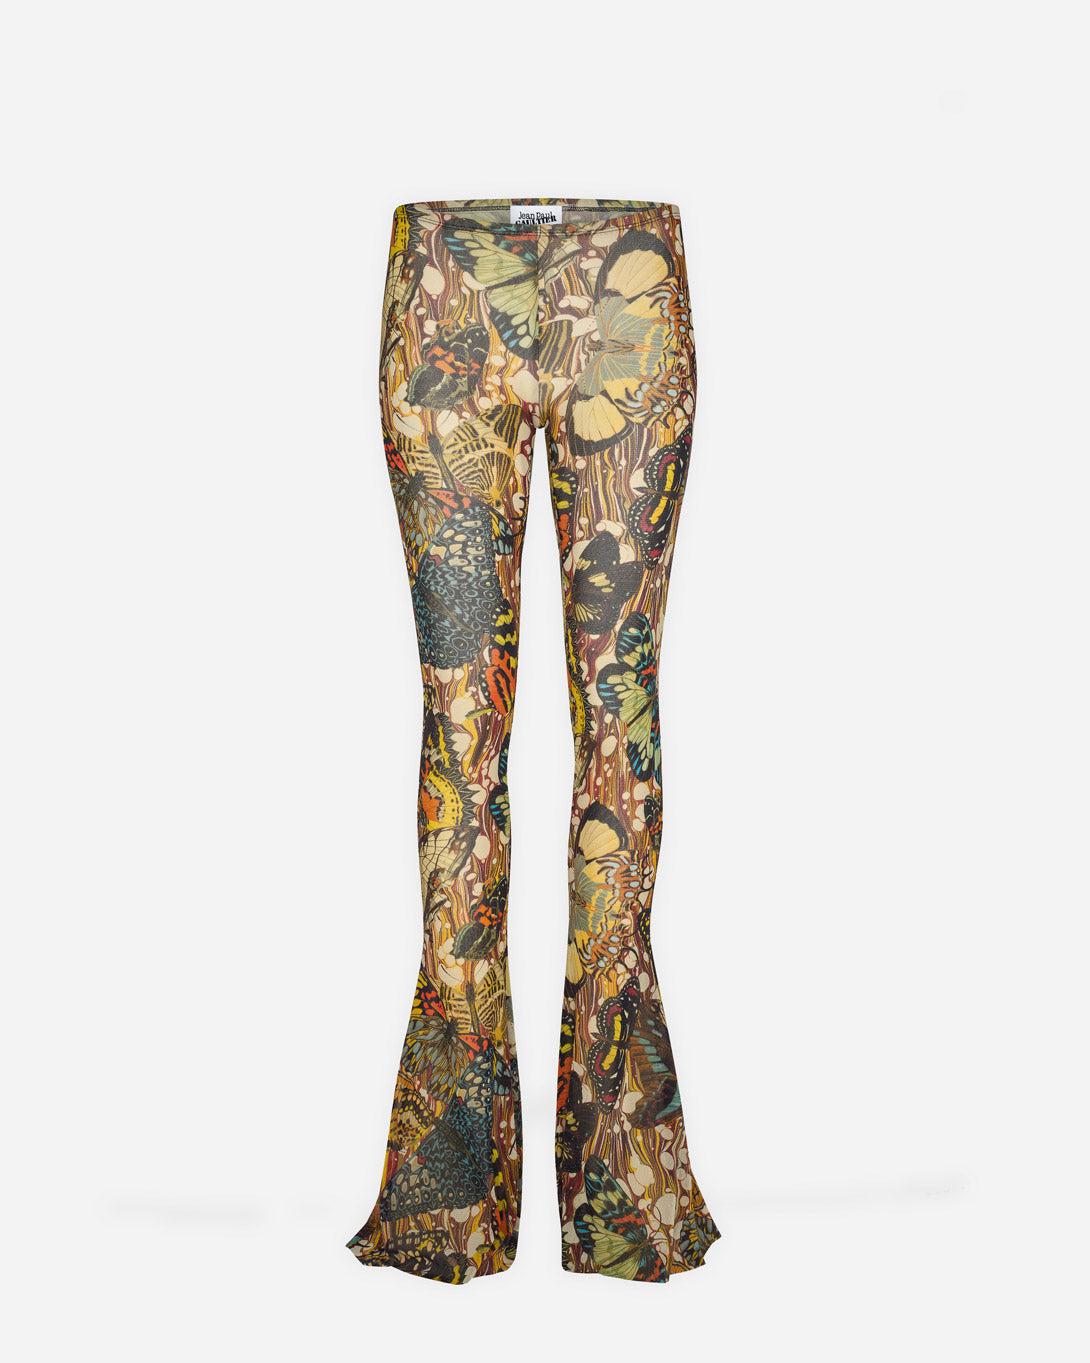 Mesh Pant Printed "Papillon" - Pants - Jean Paul Gaultier - Elevastor